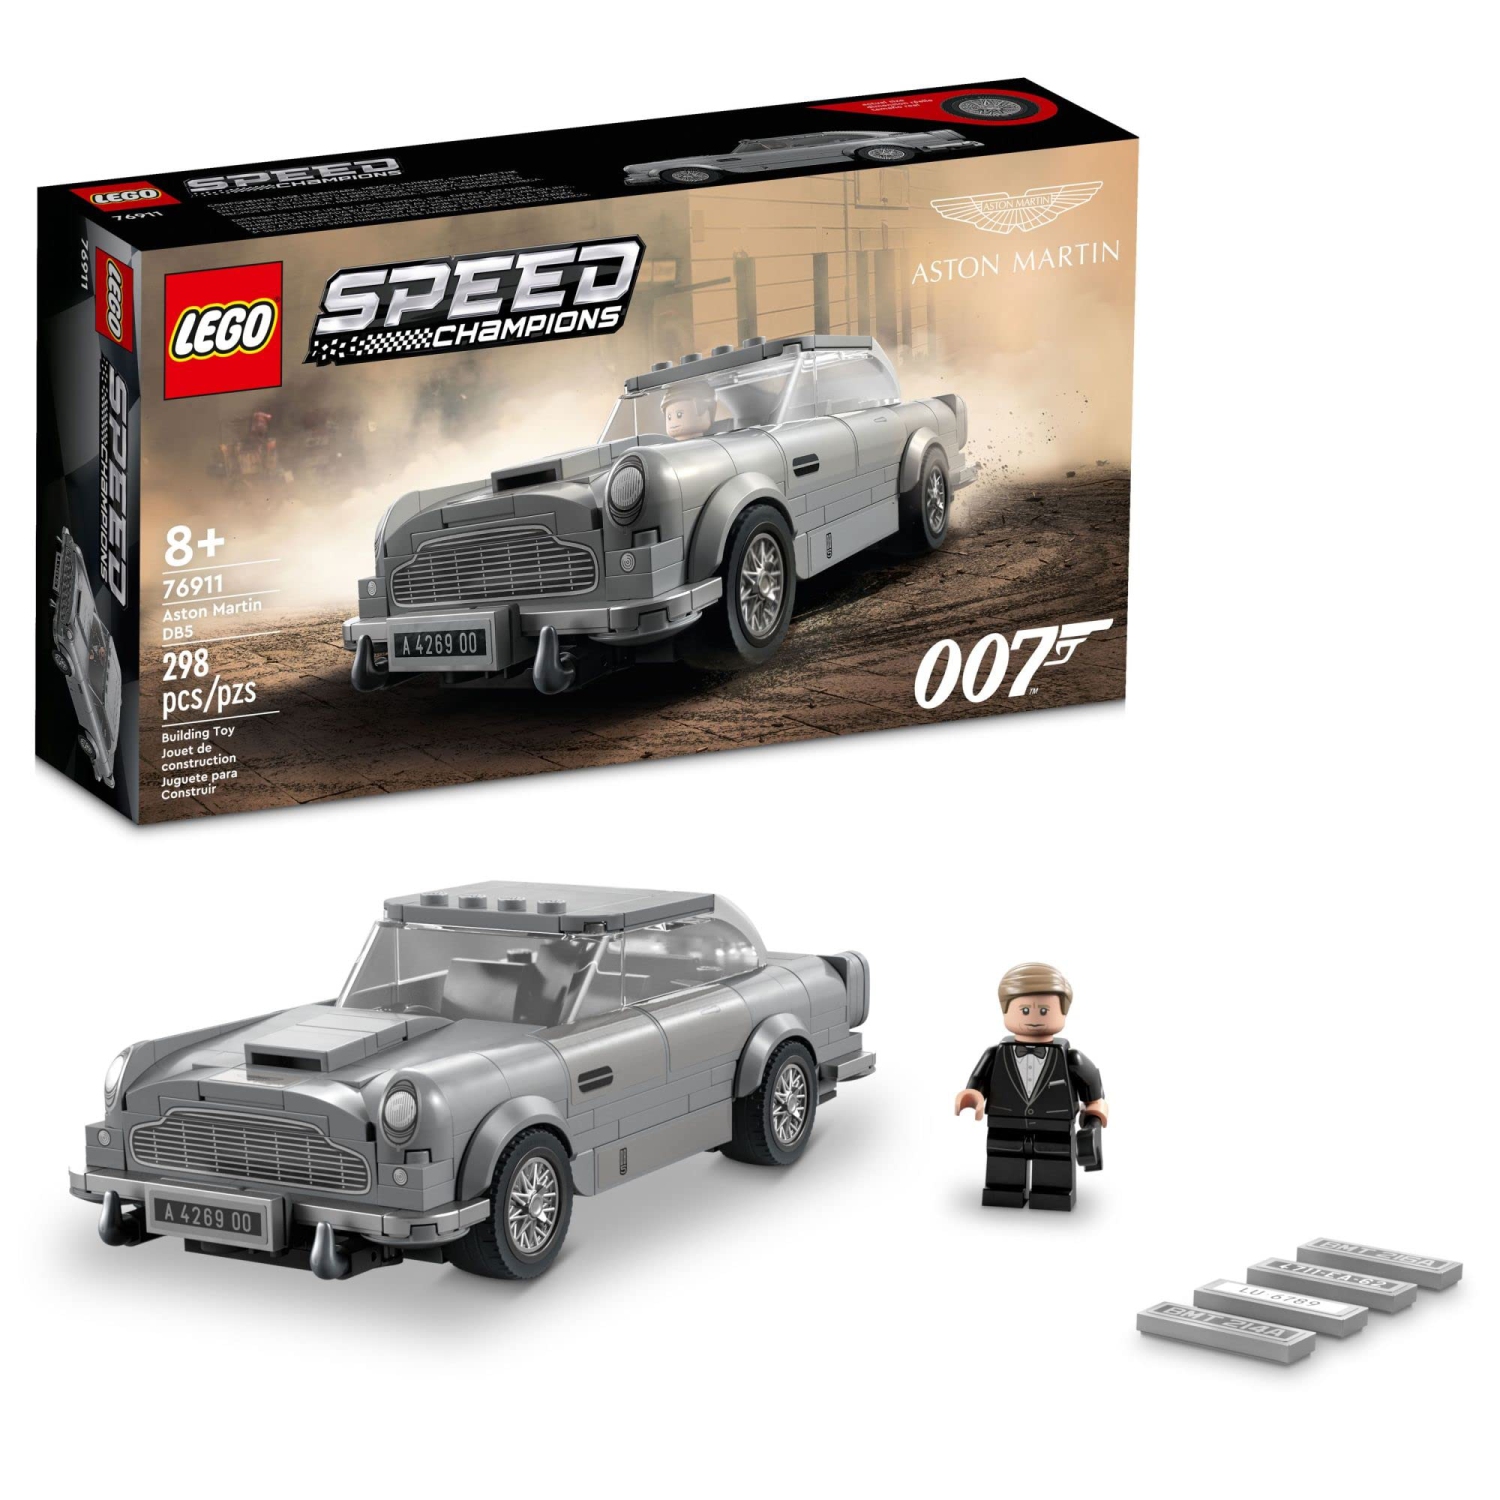 LEGO Speed Champions 007 Aston Martin